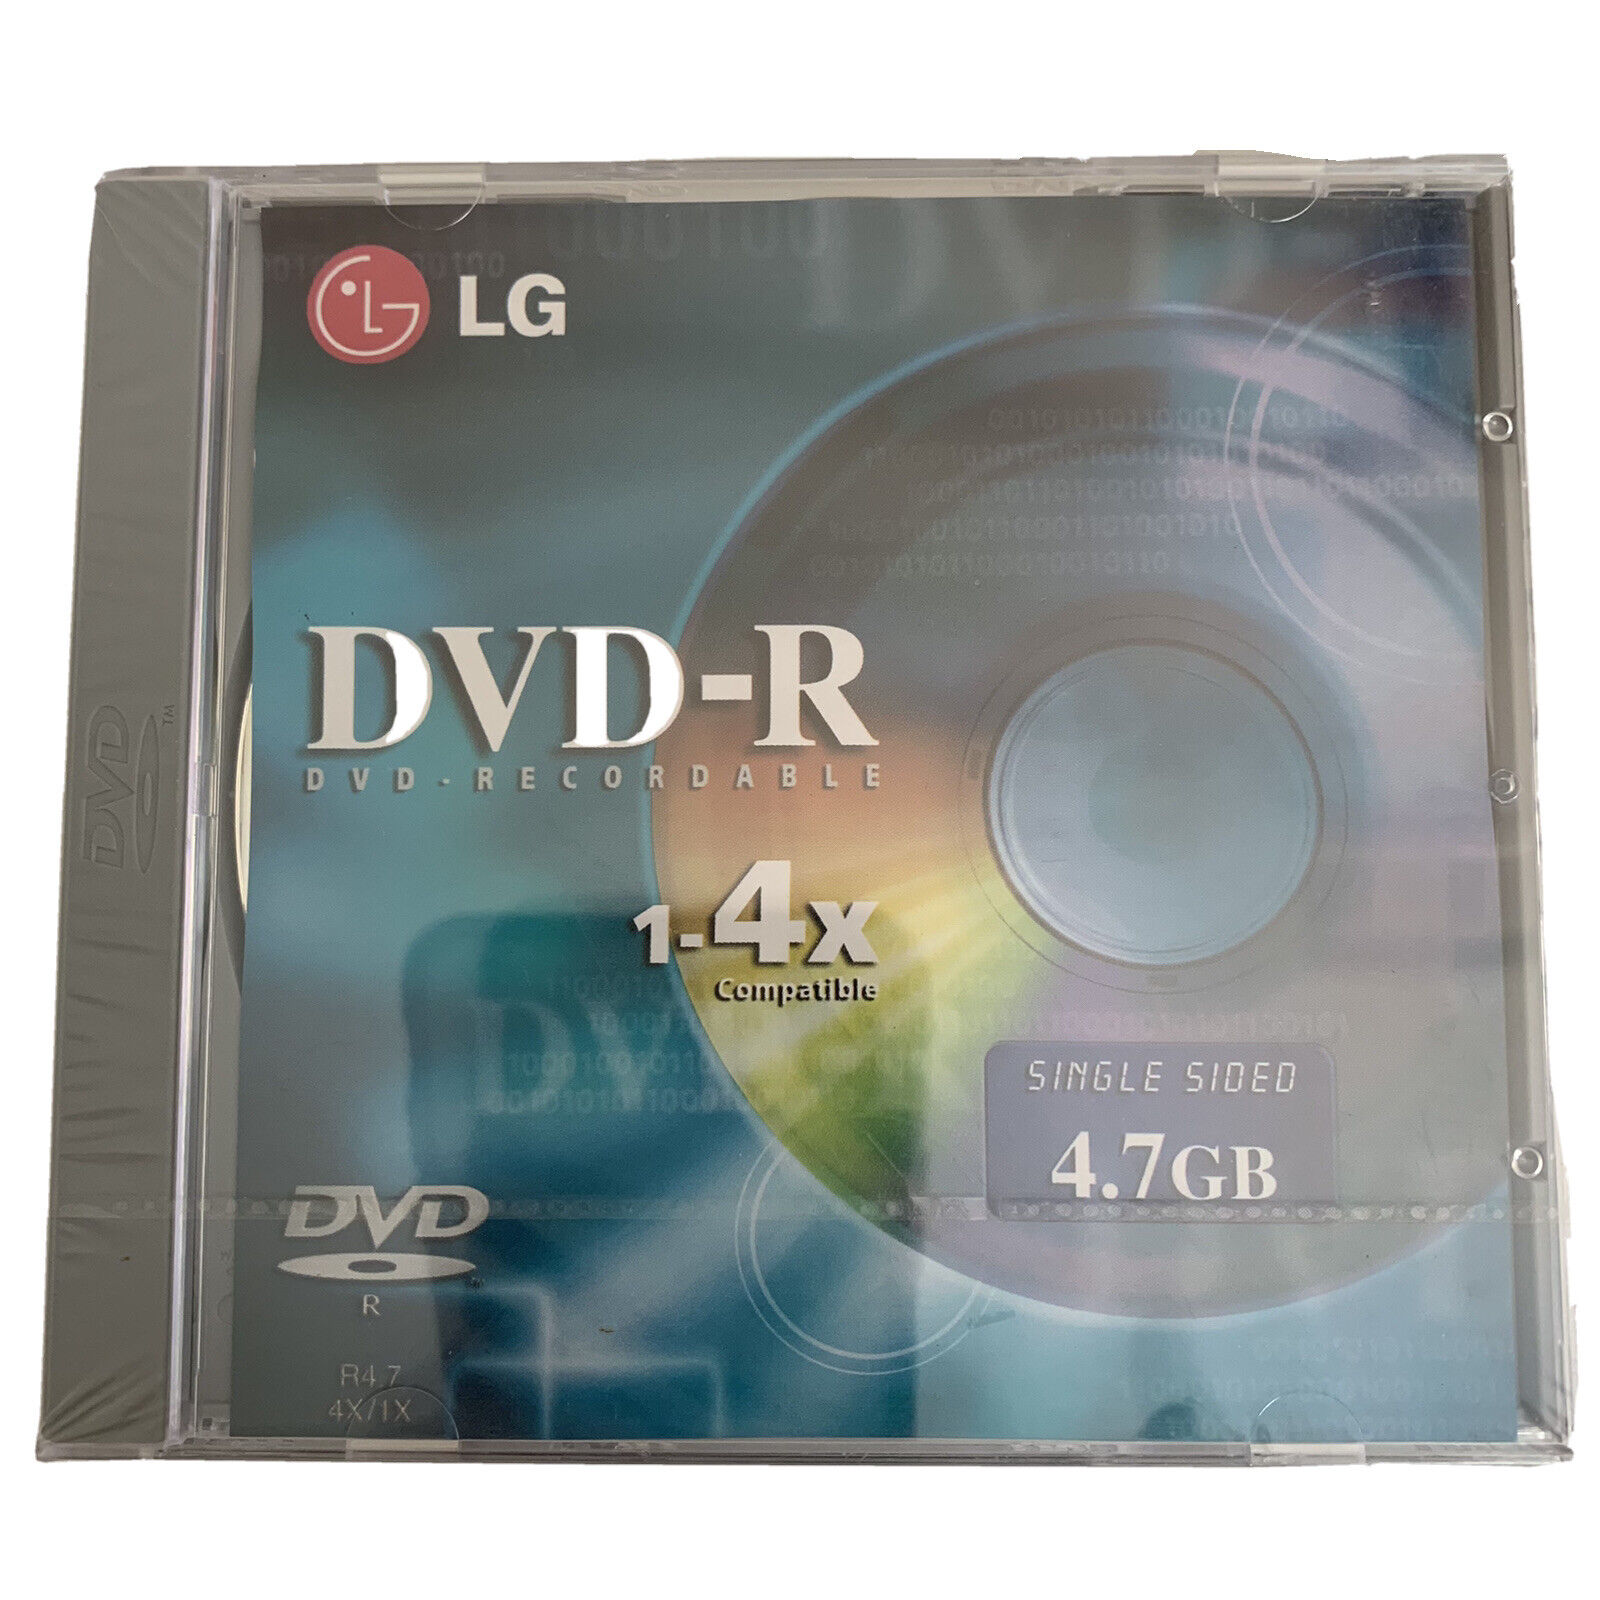 NEW VERBATIM Data Life Plus DVD + R 4.7 GB 120 MIN VIDEO 1-4X LG RECORDABLE 